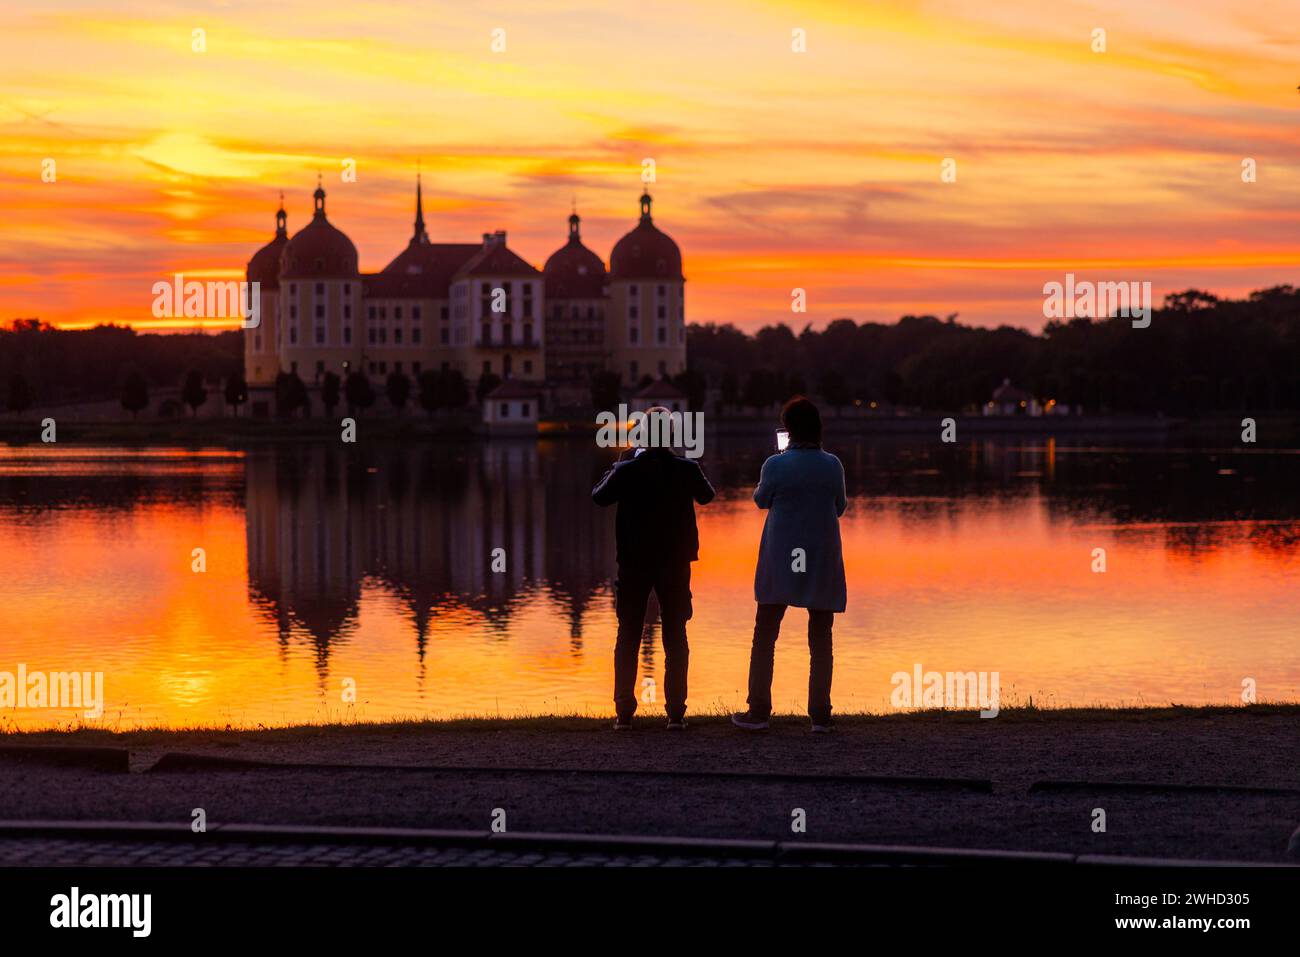 Evening atmosphere at the Fasanenschloesschen, Moritzburg, Saxony, Germany Stock Photo